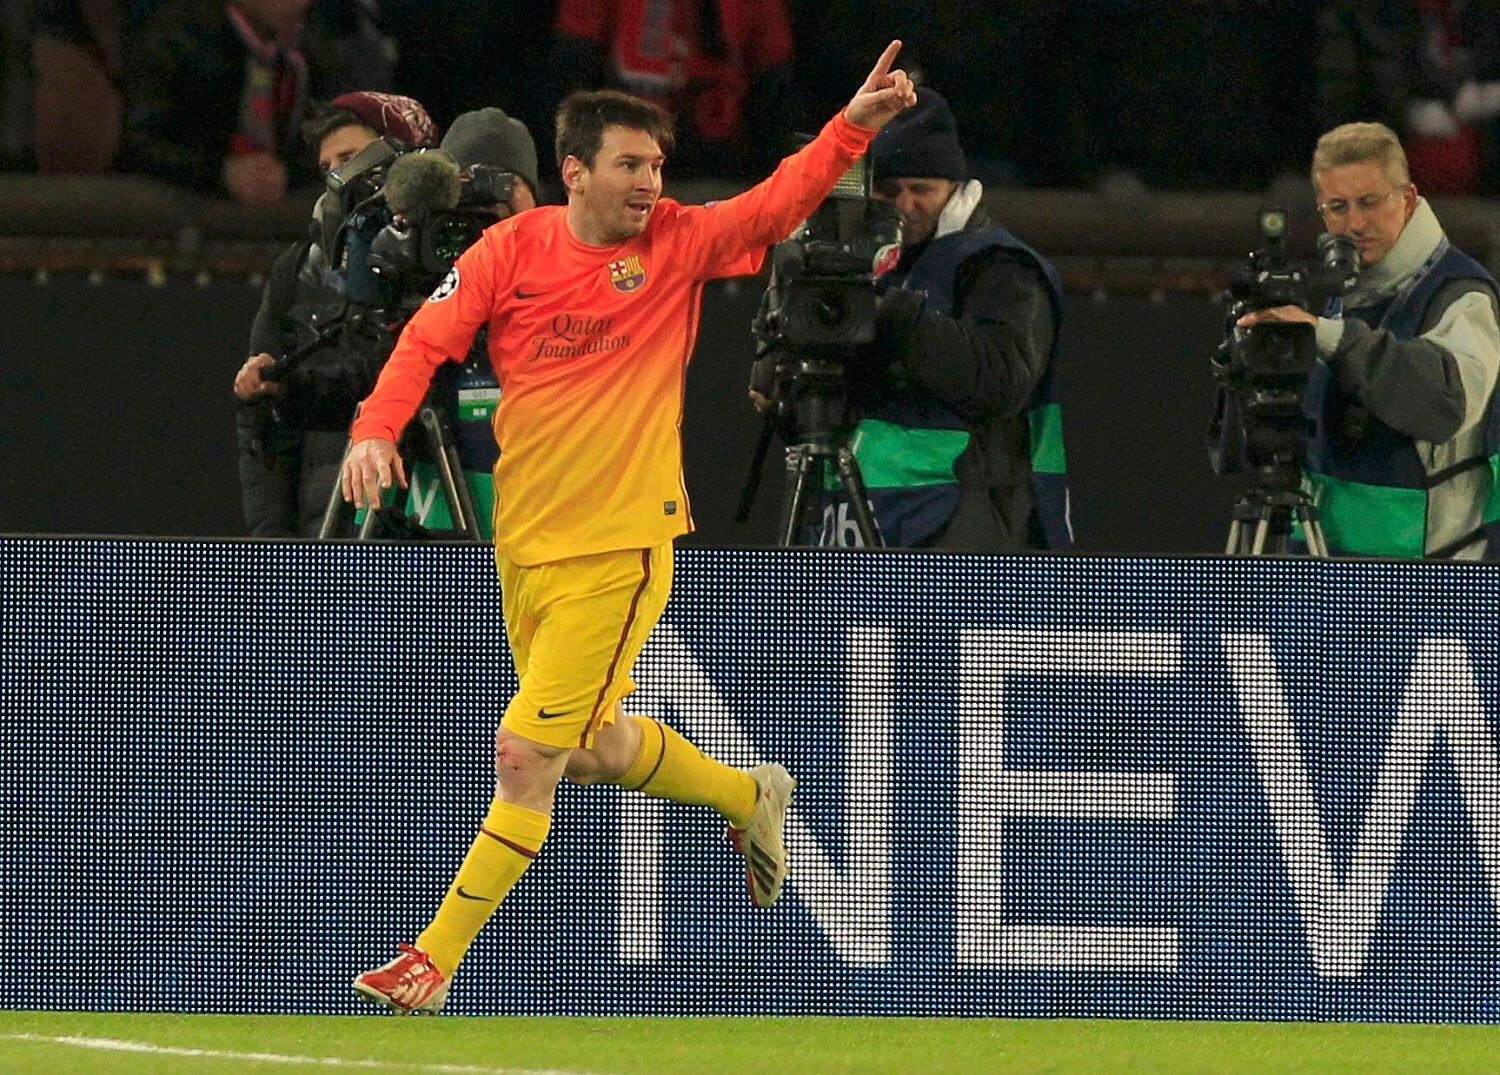 Fotbal, Liga mistrů, Paris St Germain - Barcelona: gól Messiho na 0:1